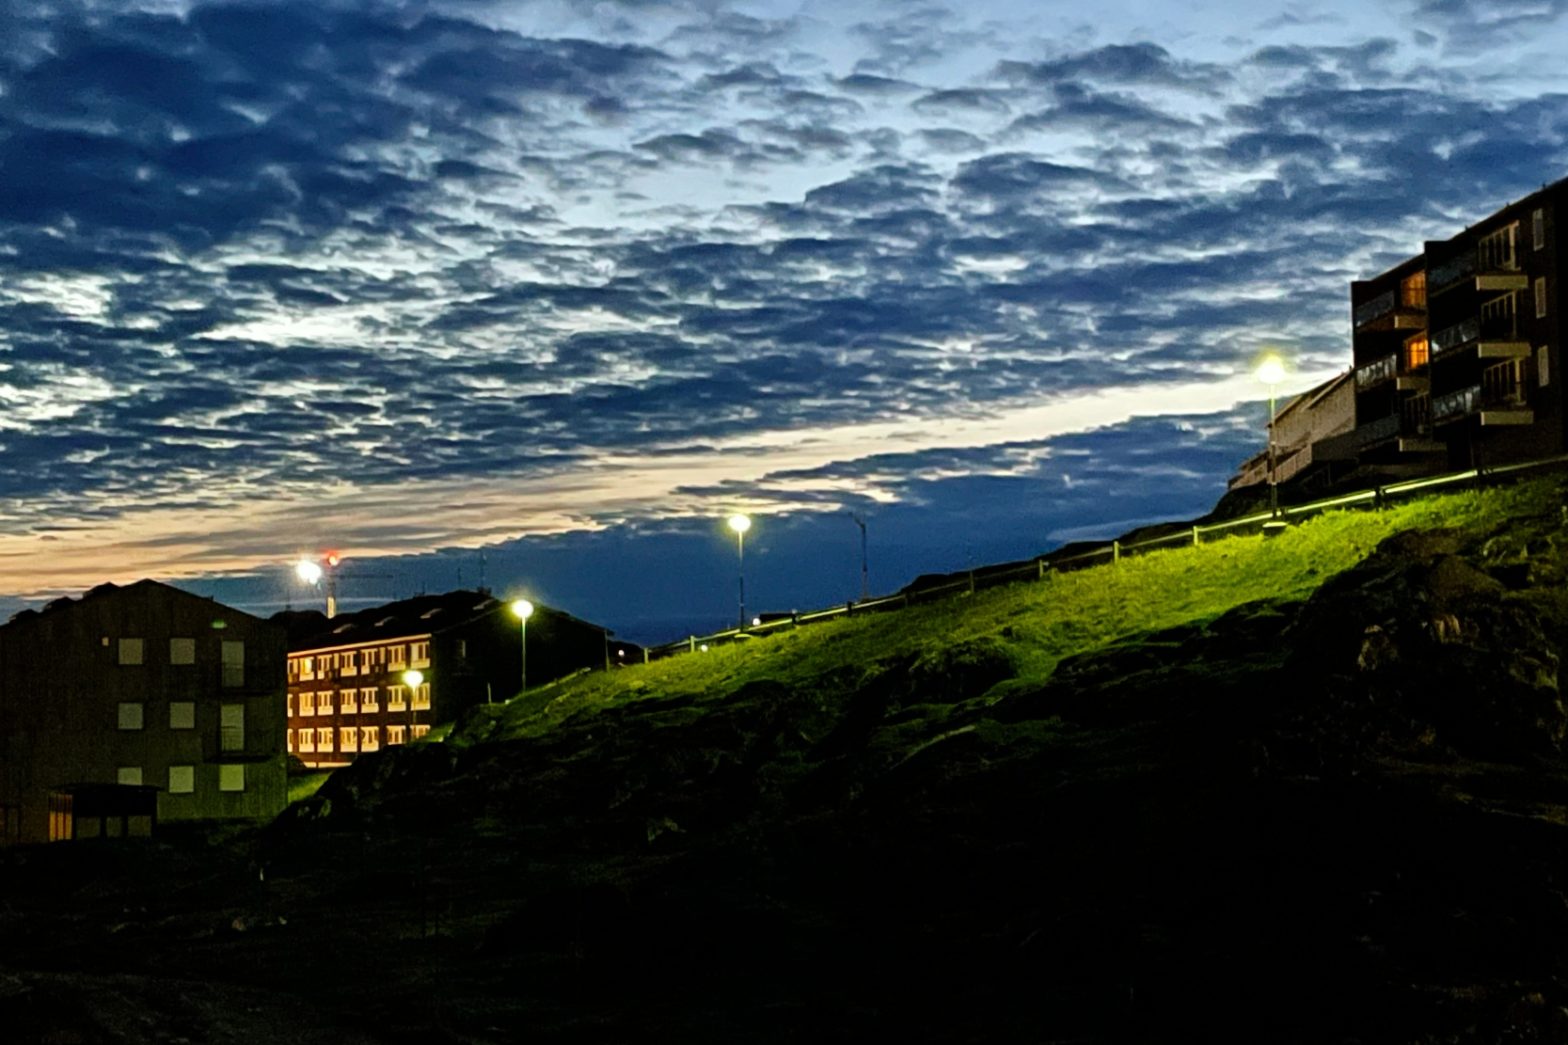 Dusk view in Nuuk